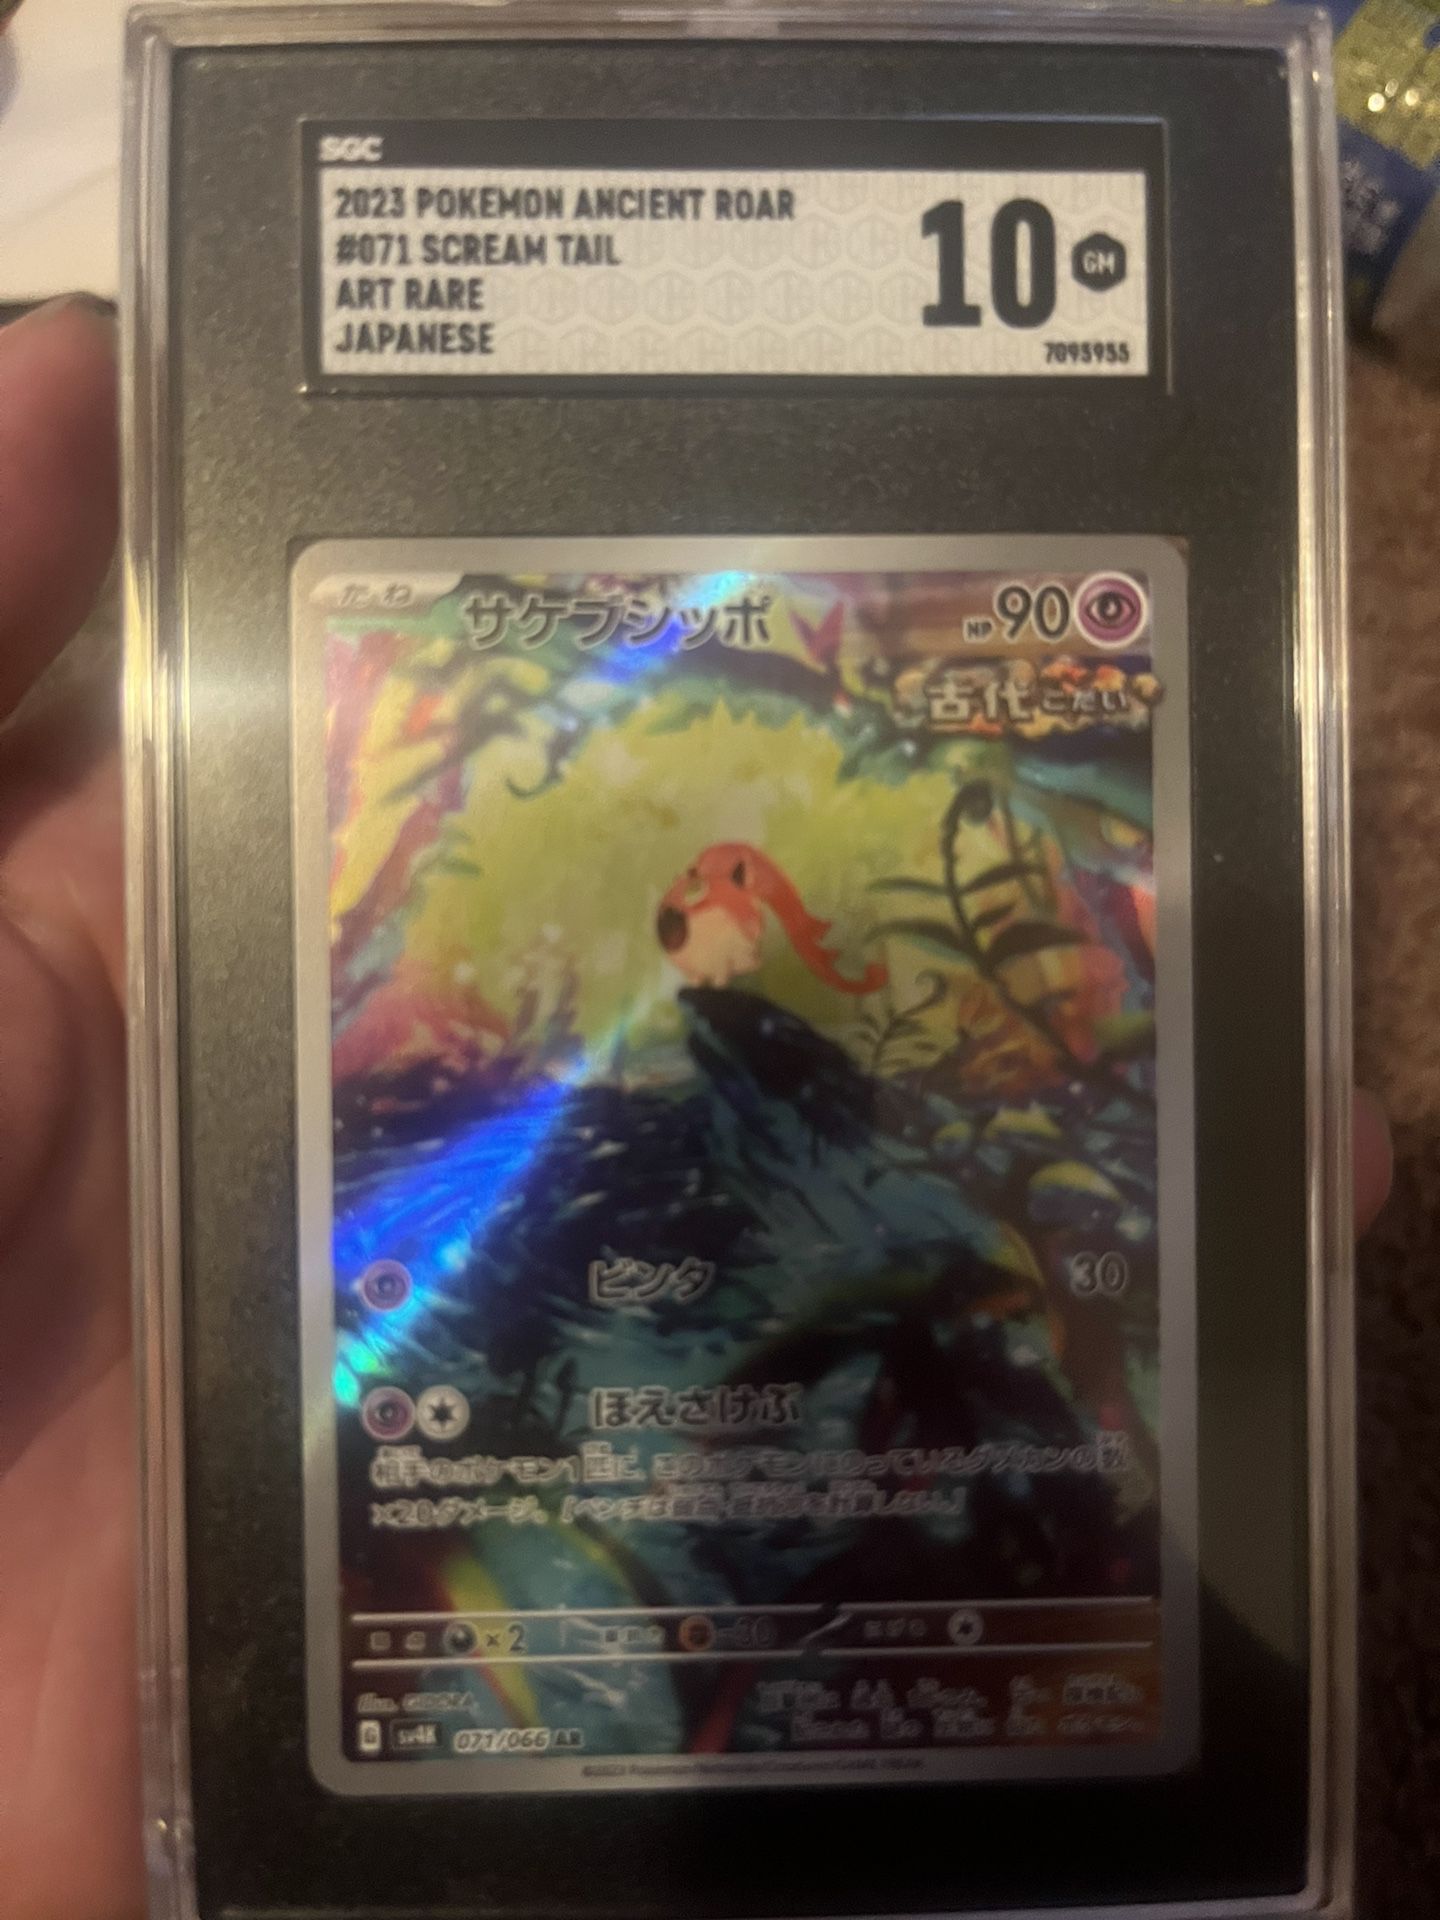 Scream Tail Art Rare Japanese Sgc 10 Pokémon Card Slab